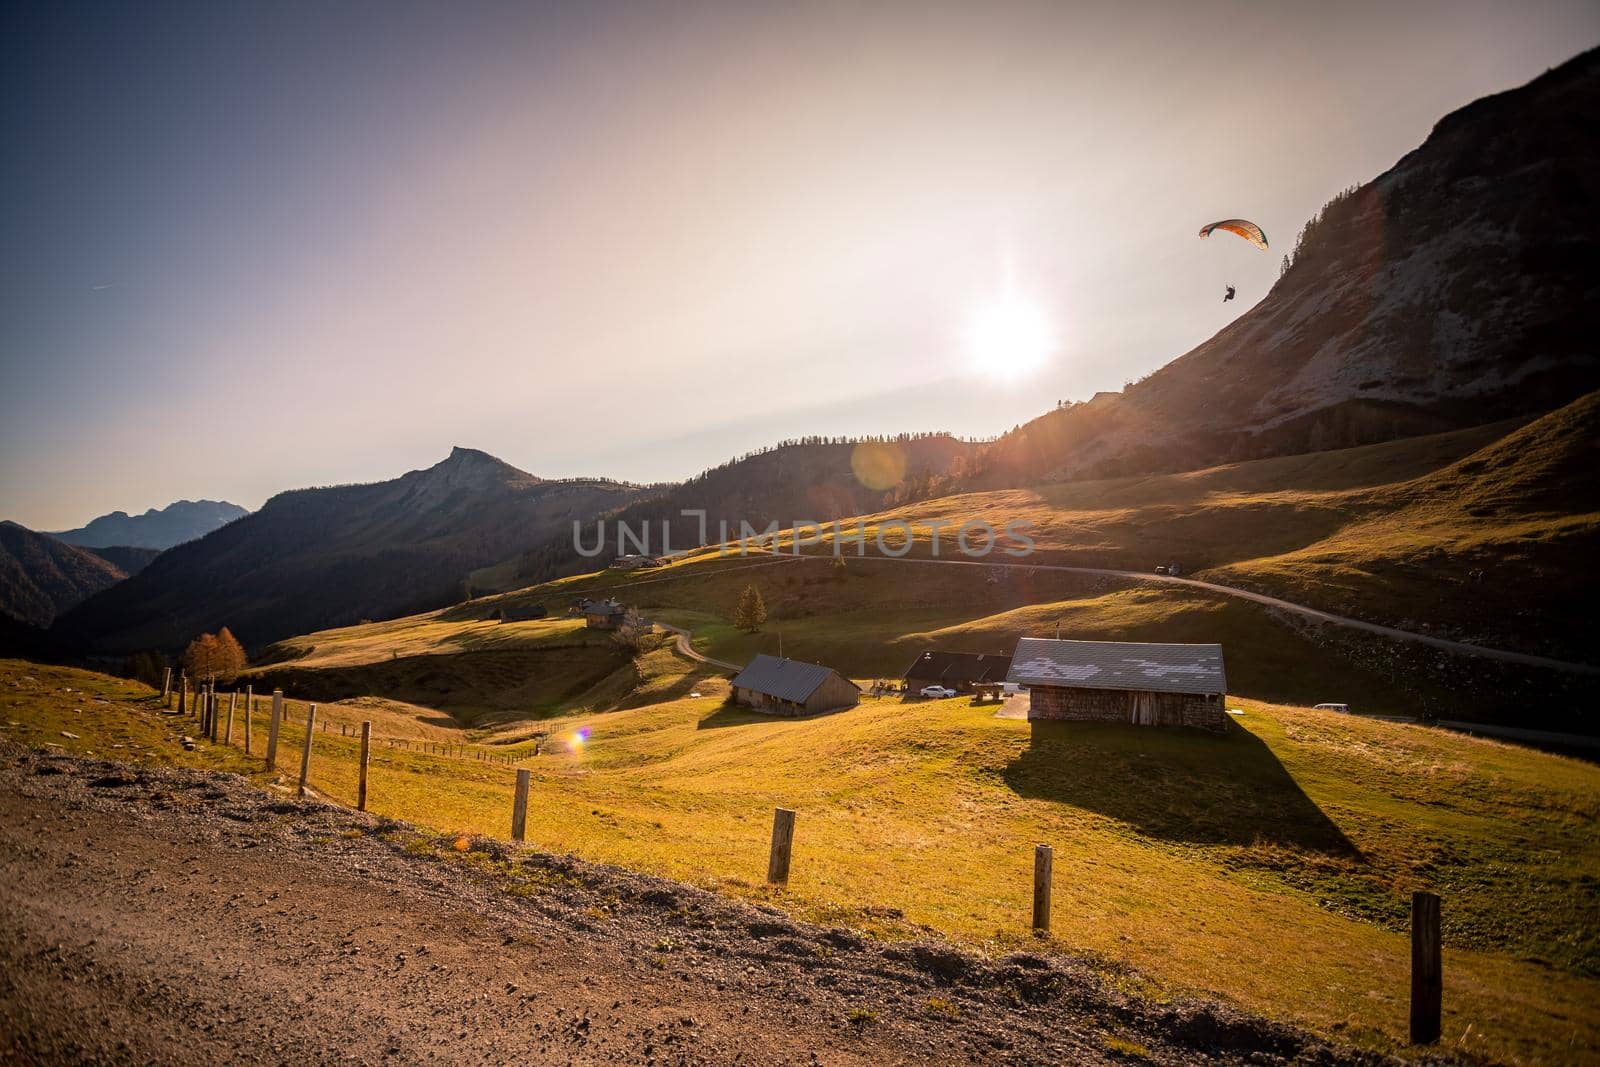 Beautiful scenic mountain scenery with huts and warm colors, sundown